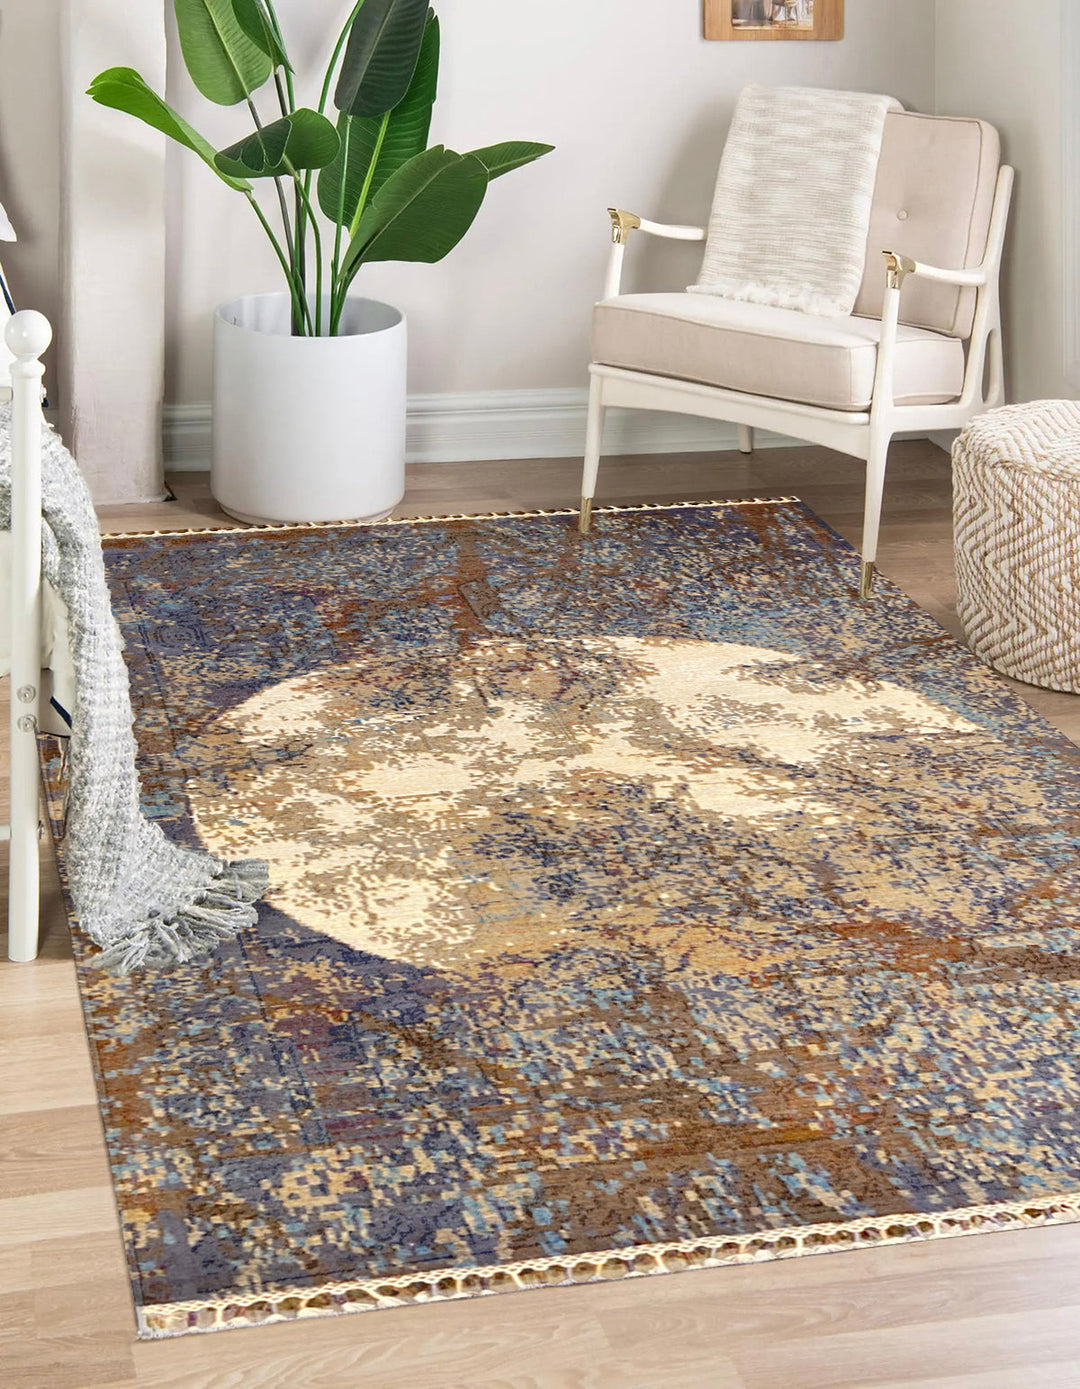 Mora - Size: 6.6 x 4.1 - Imam Carpet Co